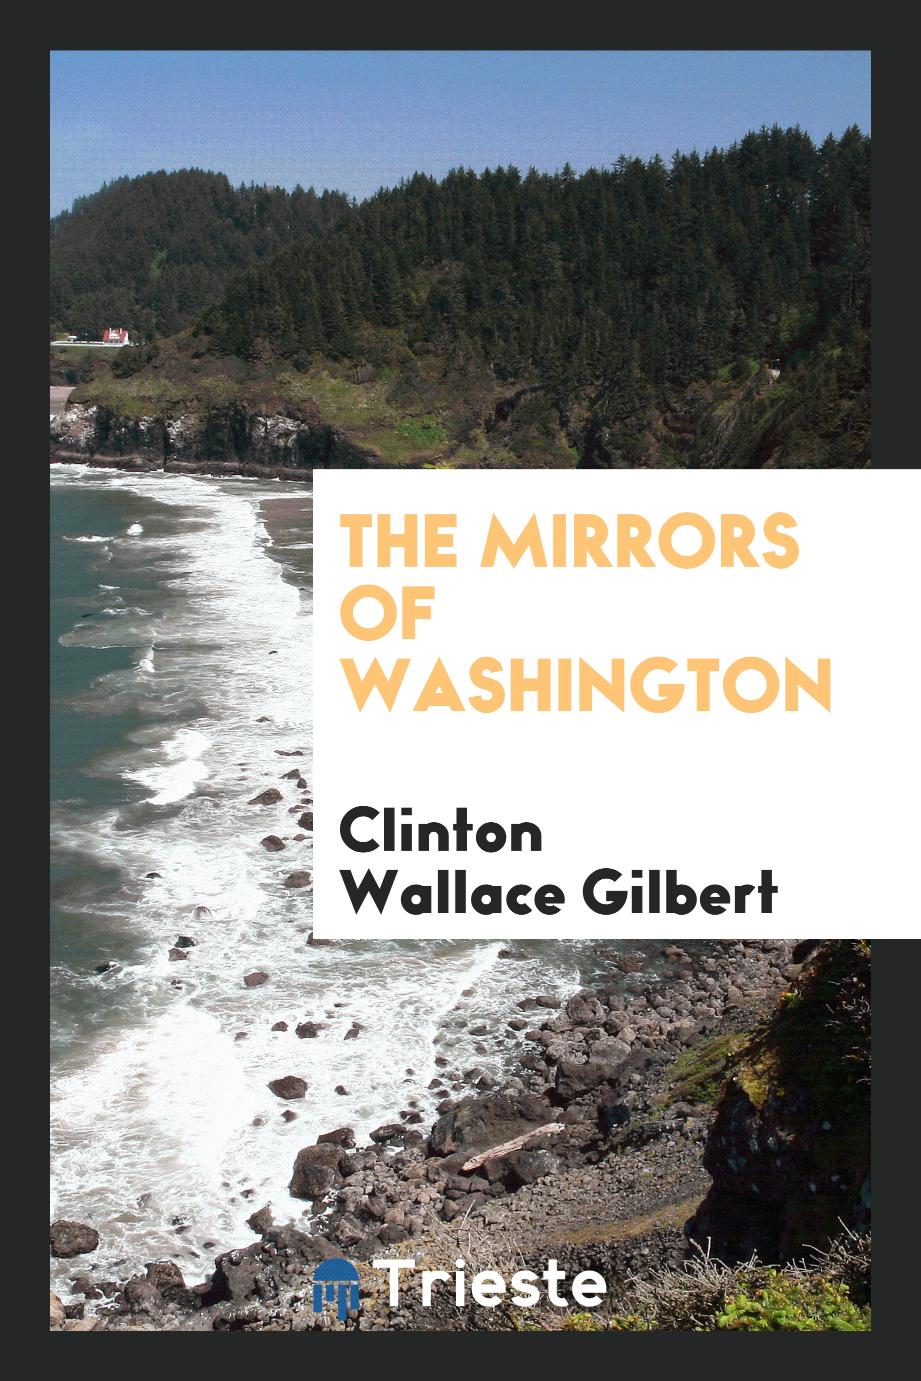 The mirrors of Washington